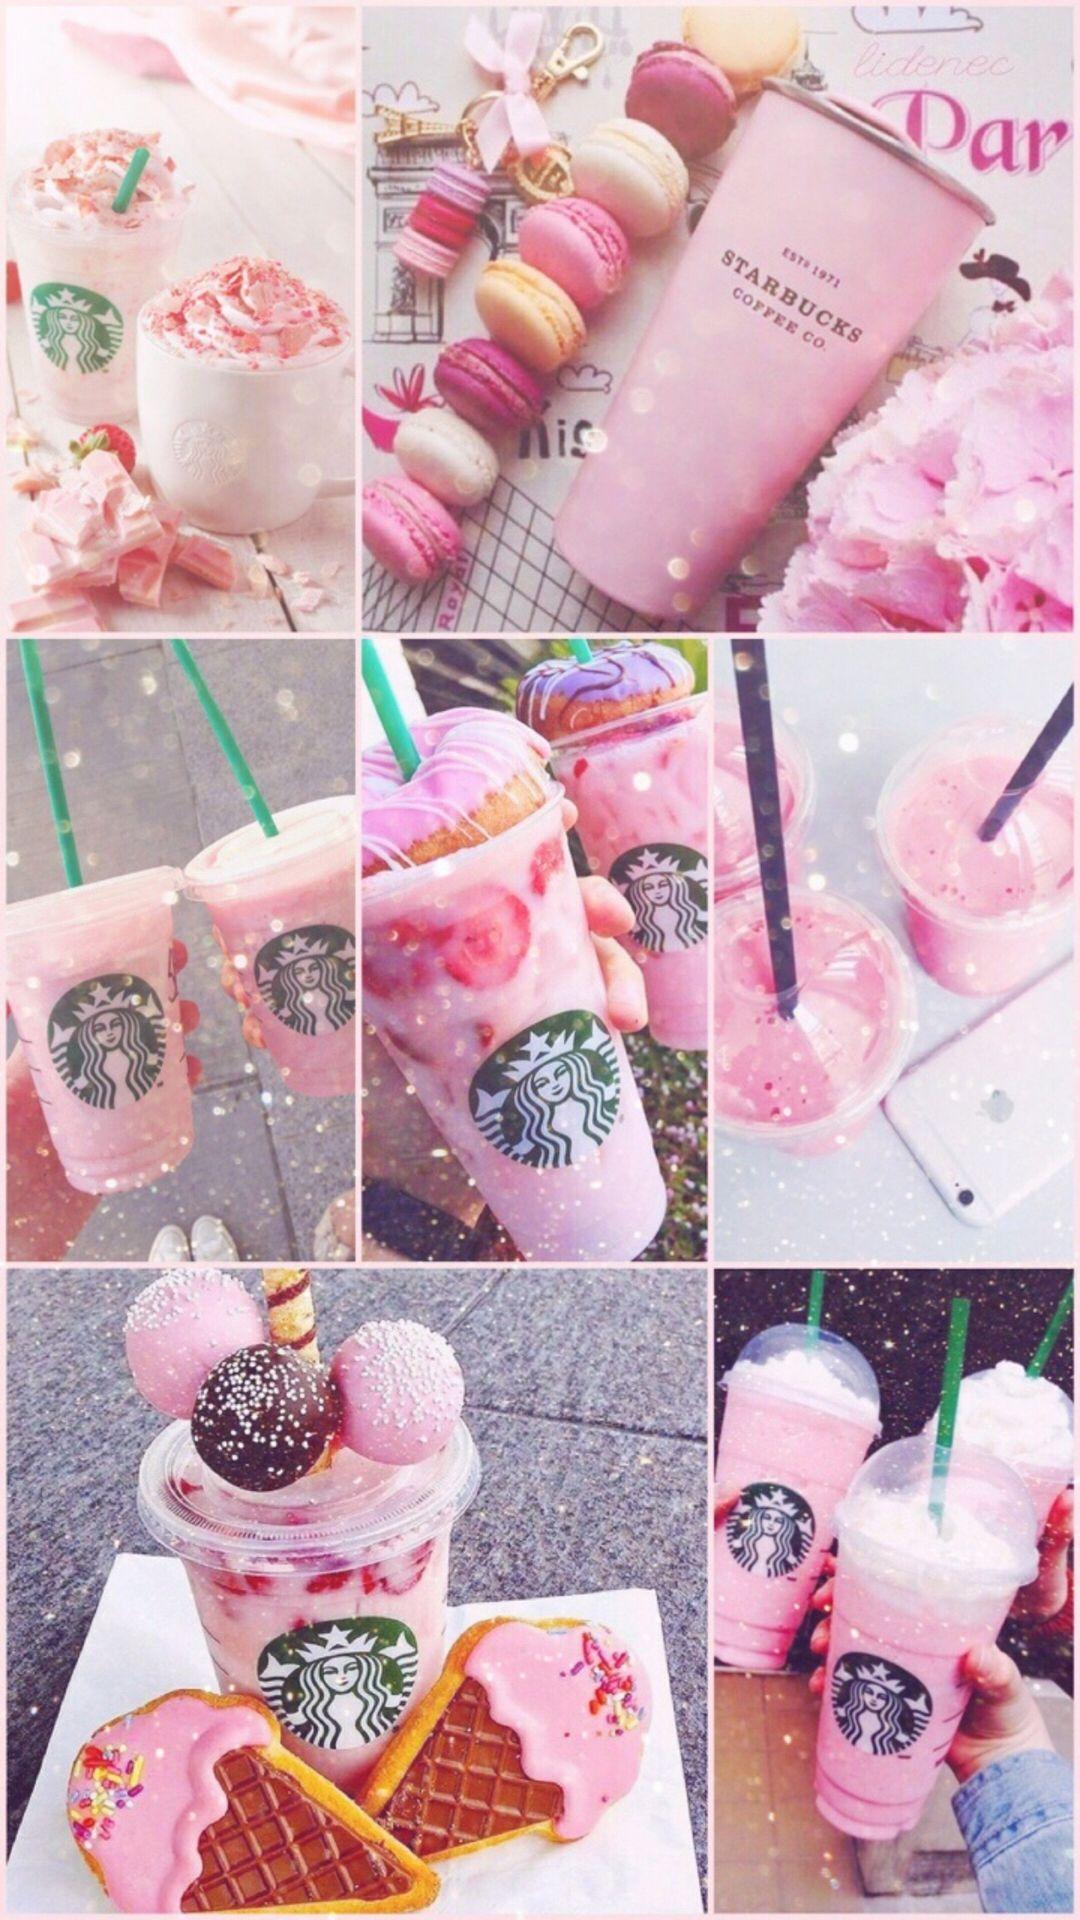 A Picture From Kefir W 2366140. Starbucks Wallpaper, Pink Drinks, Unicorn Desserts